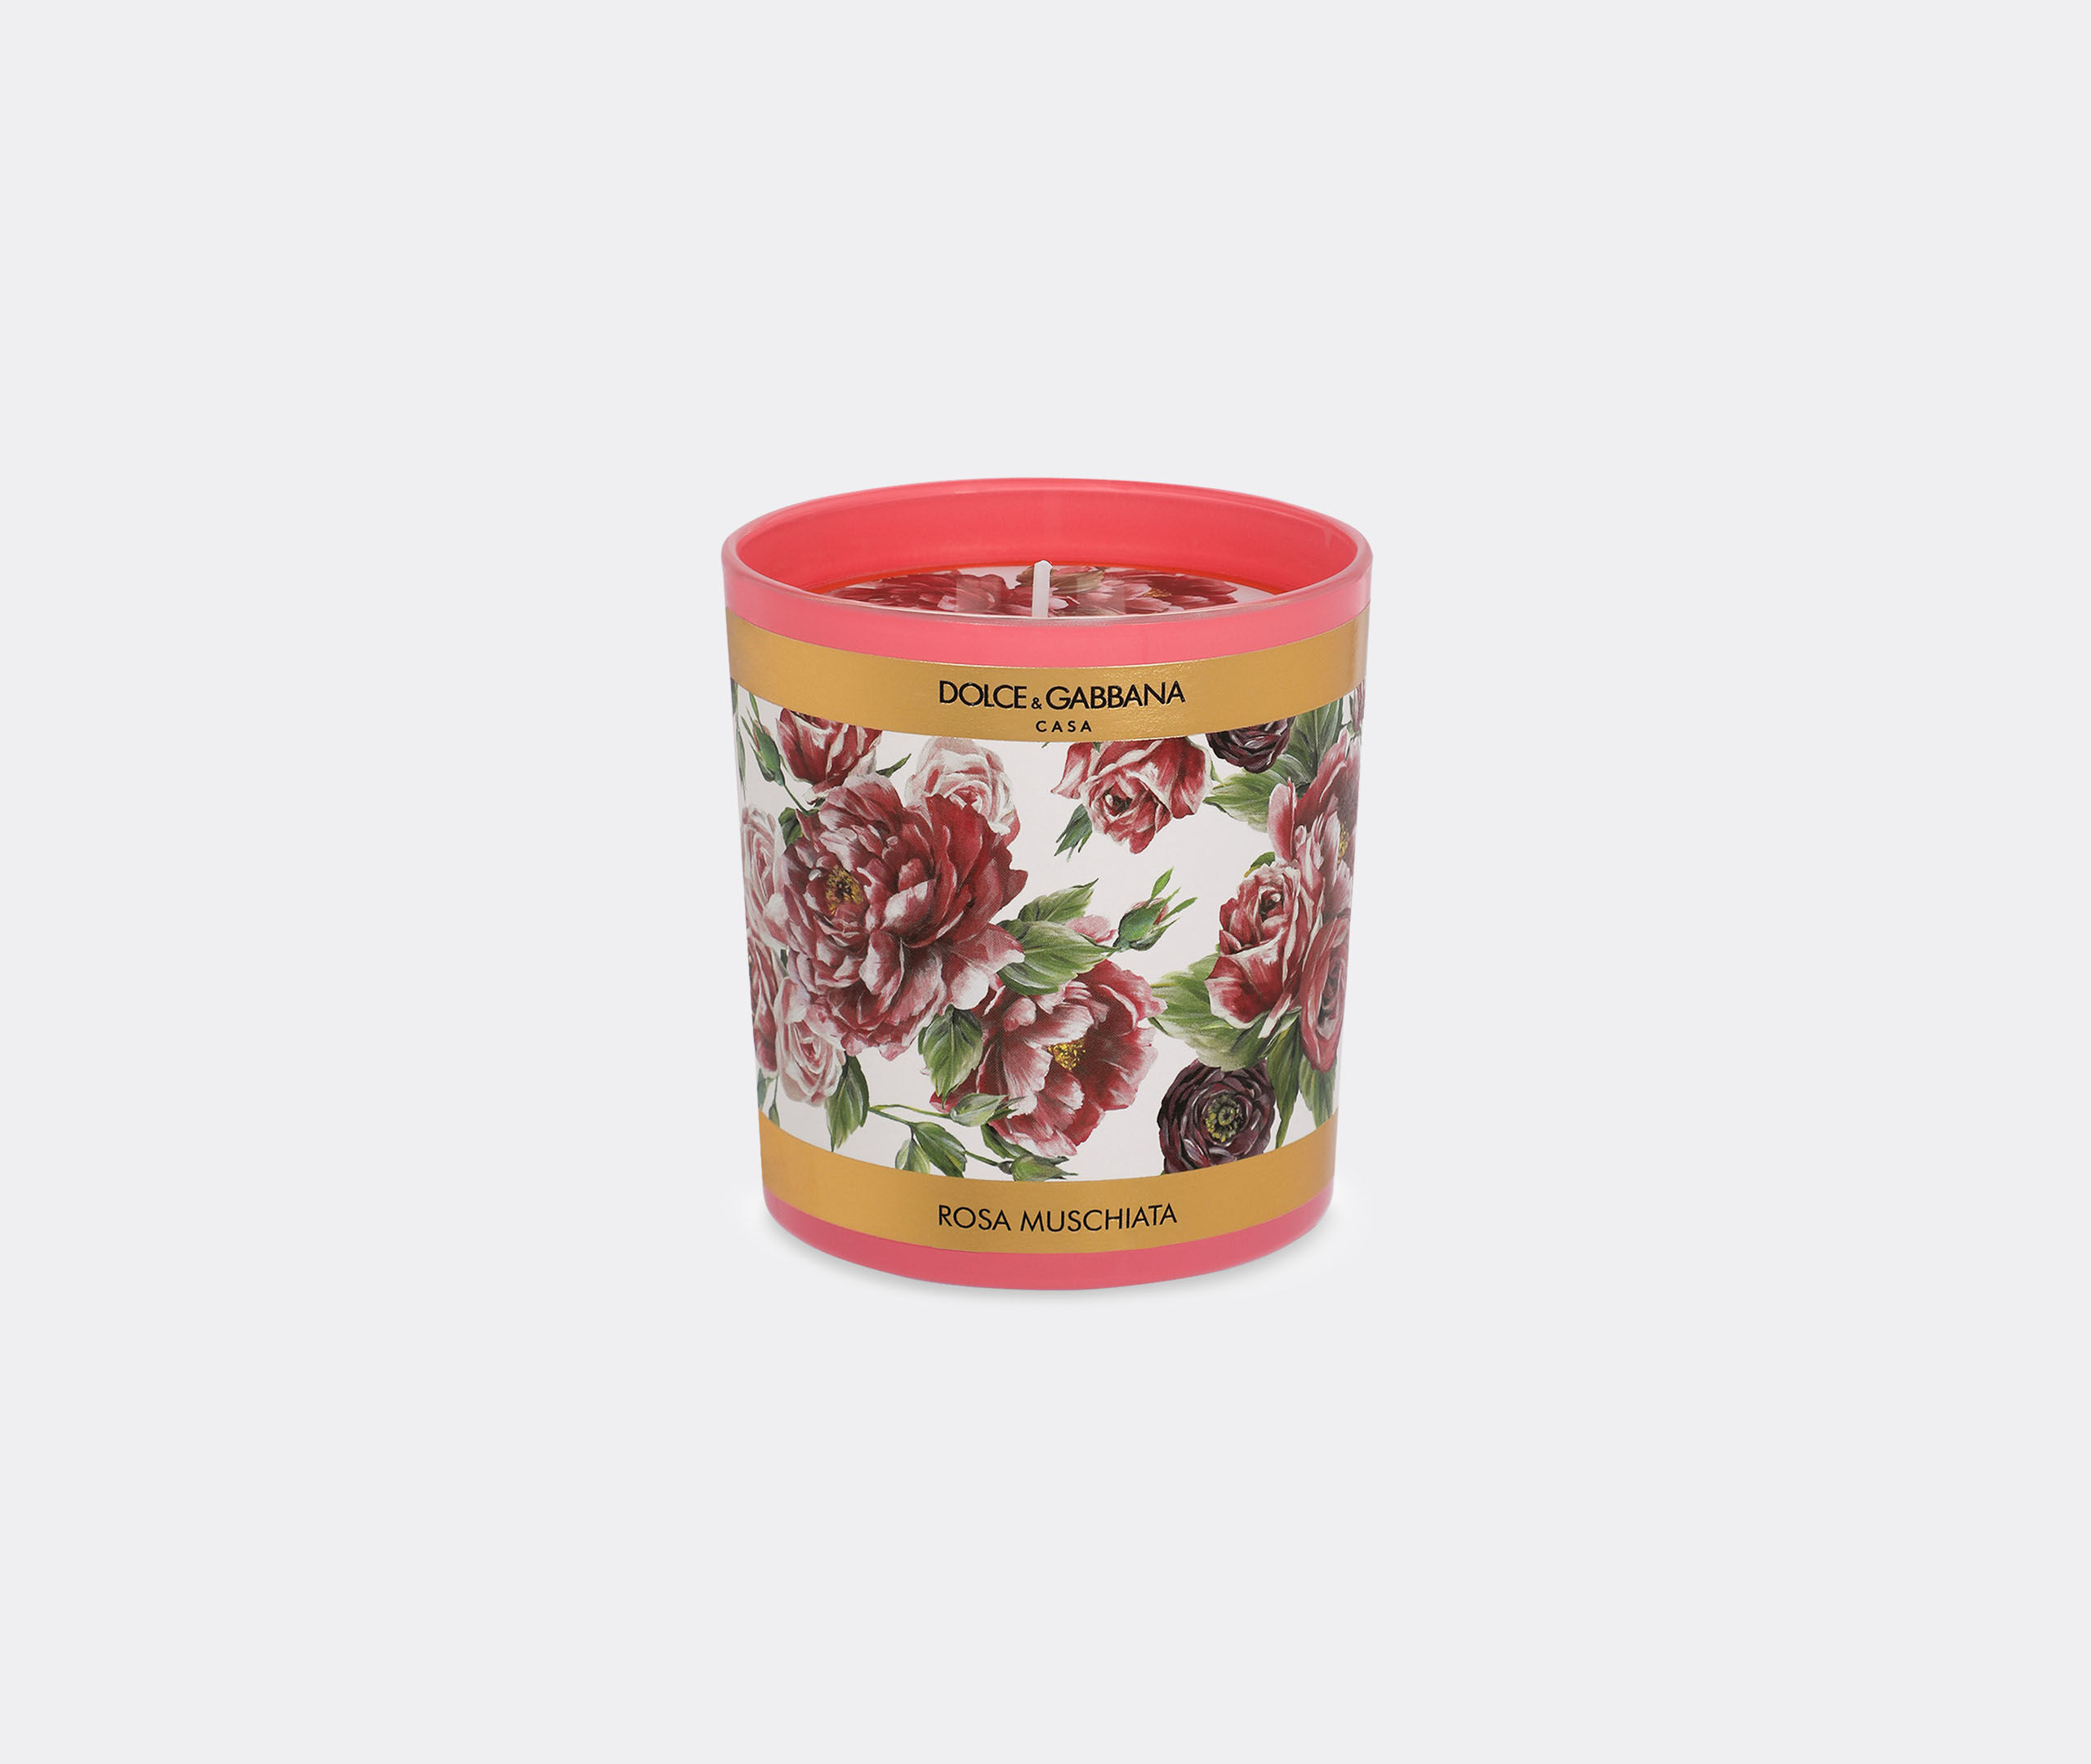 dolce&gabbana casa 'musk rose' scented candle